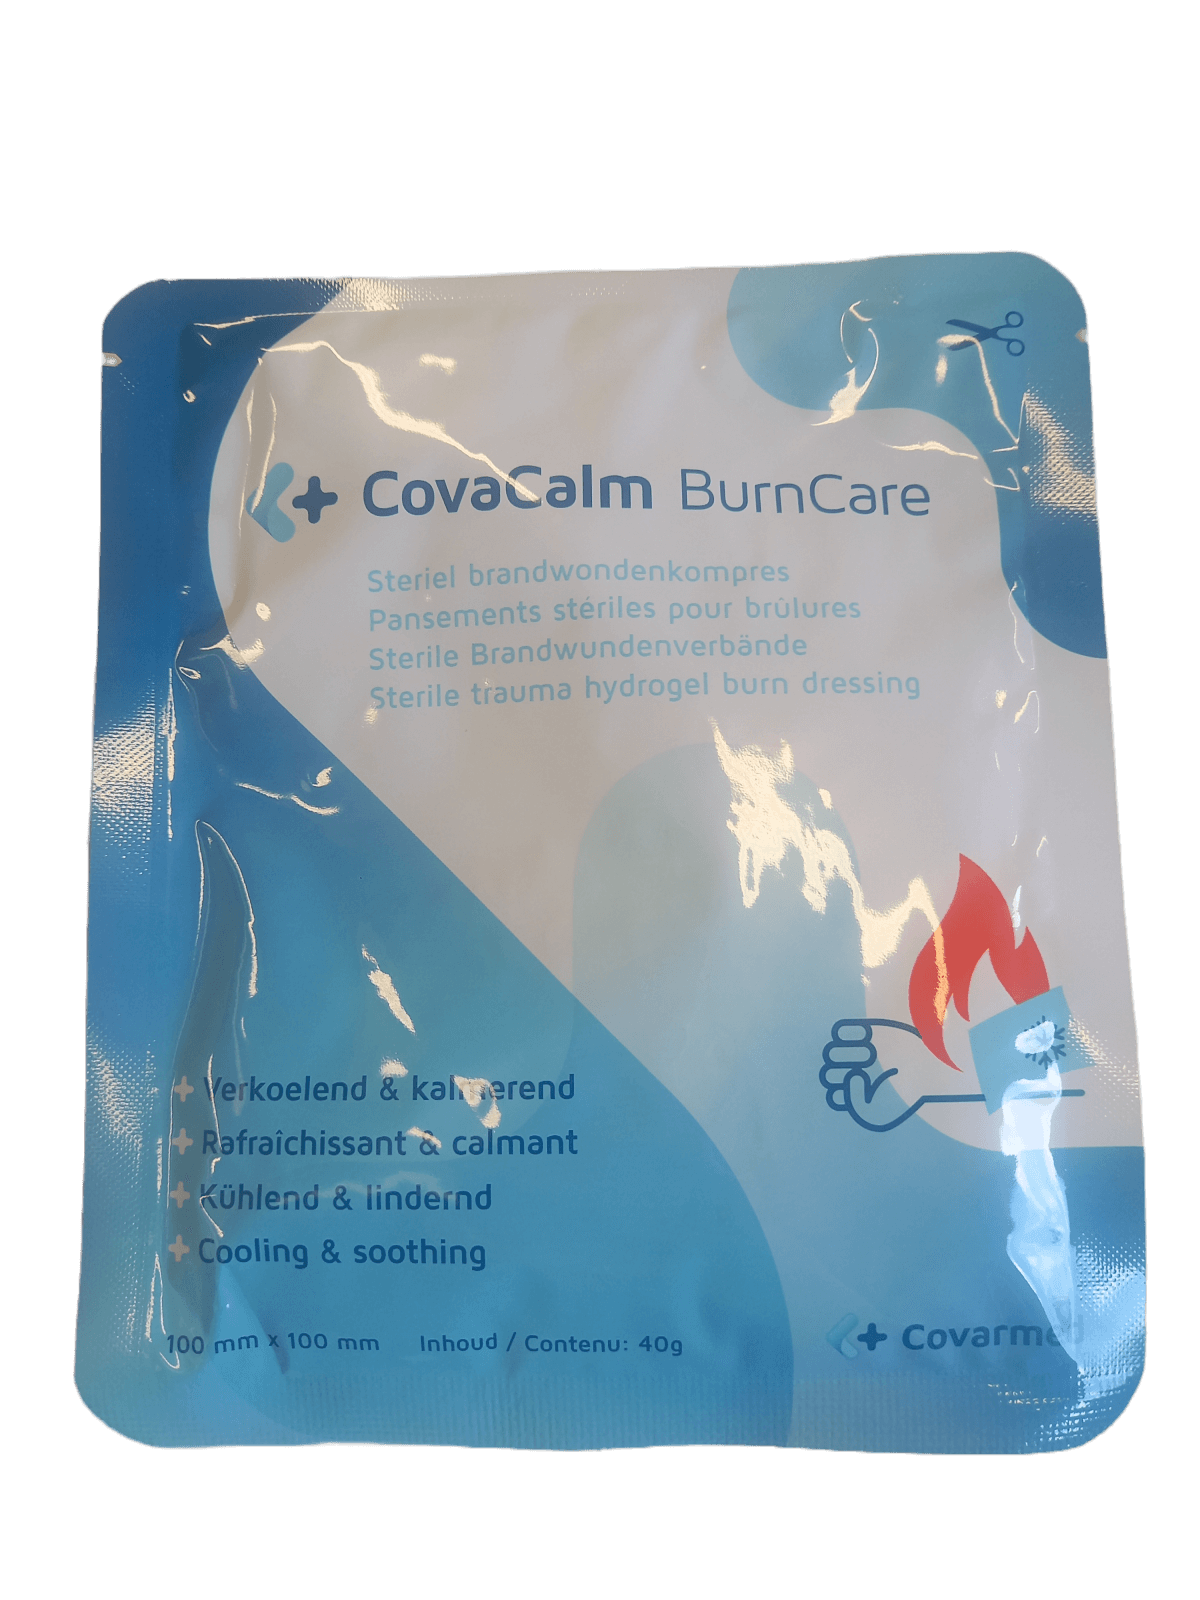 CovaCalm BurnCare kit